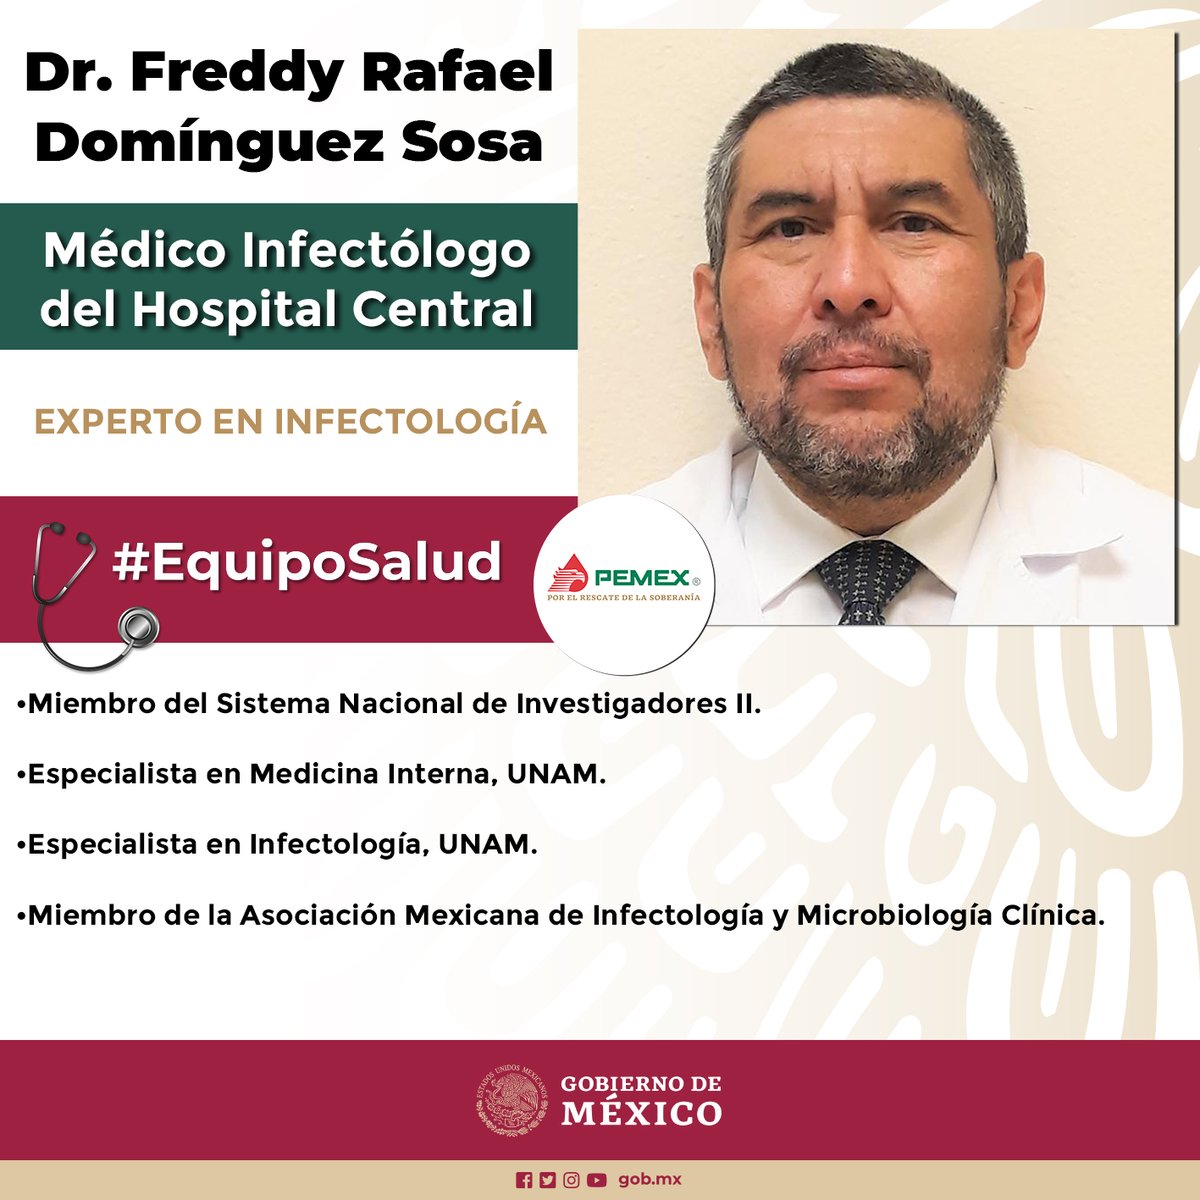 PuertoLazaroCardenas on Twitter: "El Dr. Freddy Rafael Domínguez ...